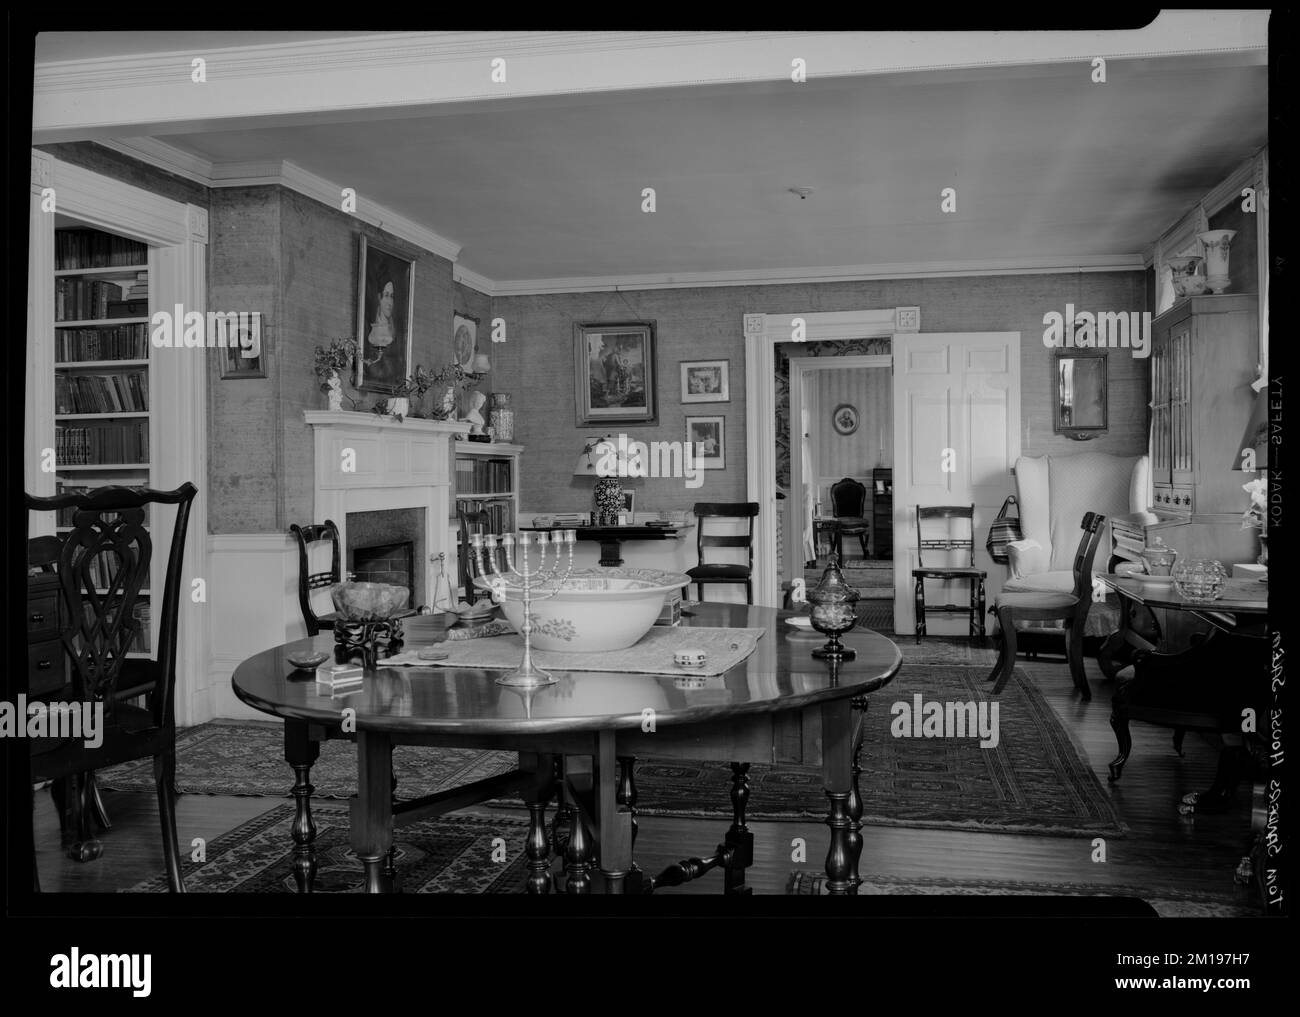 Thomas Sanders House, Salem, MA, interior , Rooms & spaces. Samuel Chamberlain Photograph Negatives Collection Stock Photo